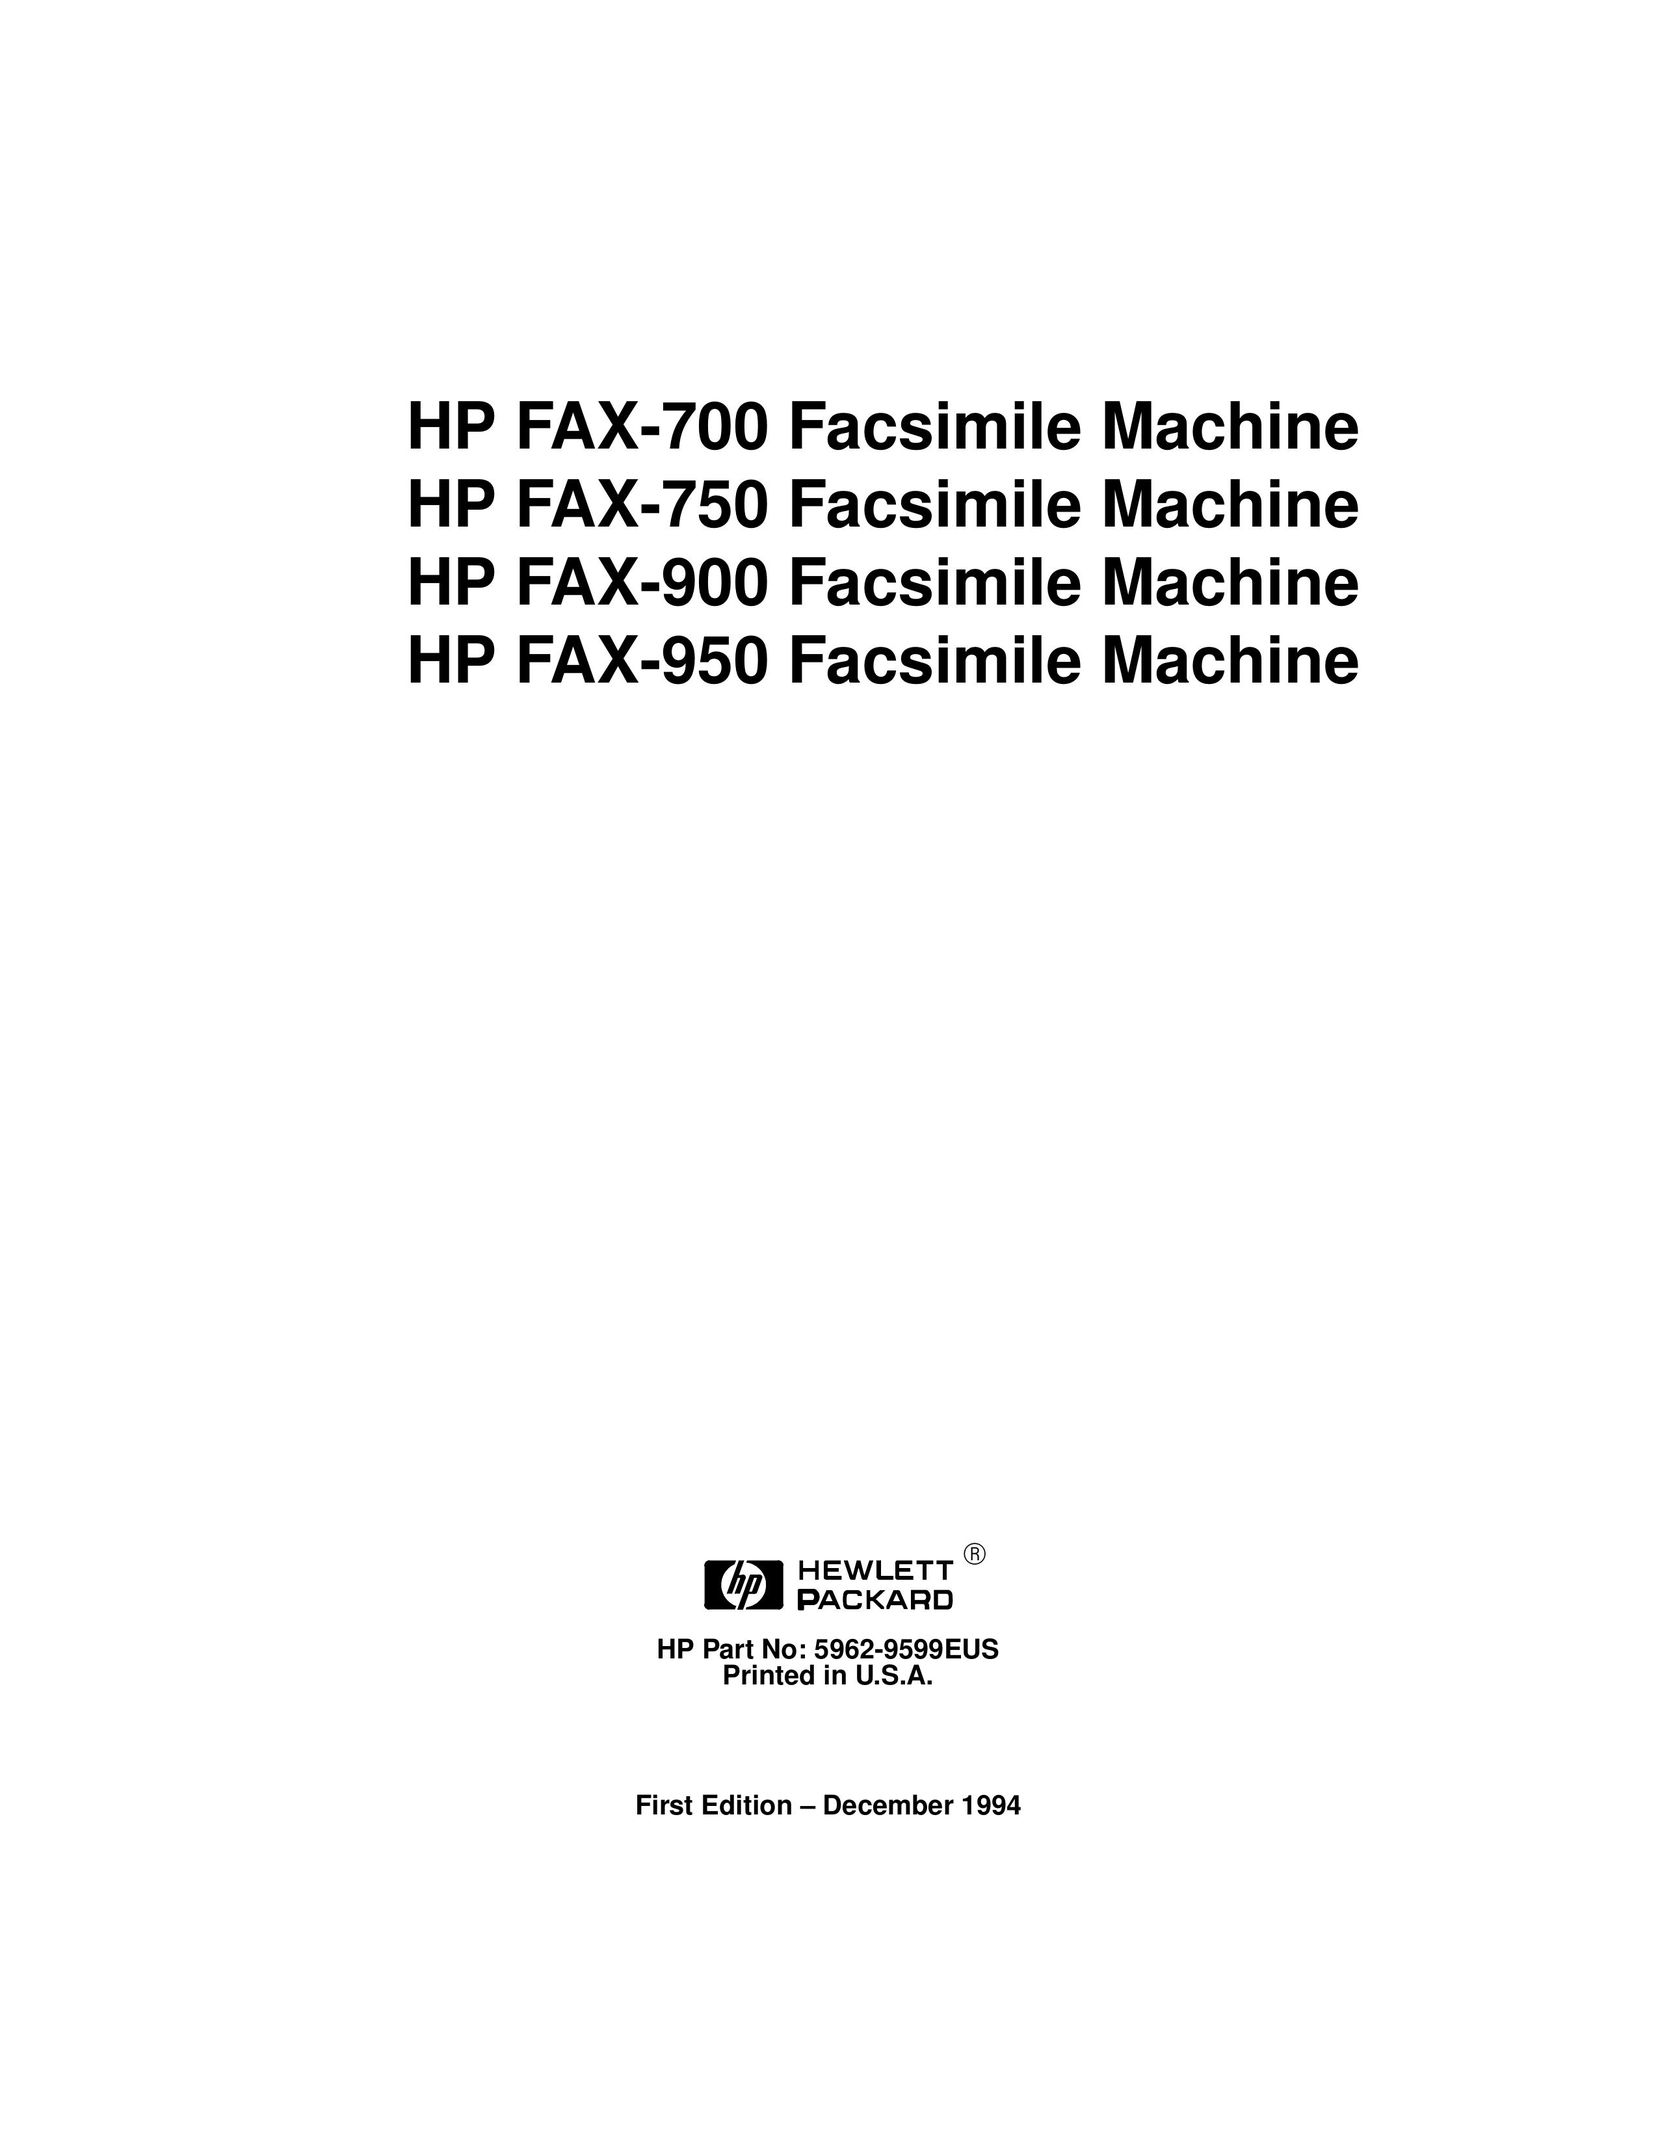 HP (Hewlett-Packard) FAX-700 Fax Machine User Manual